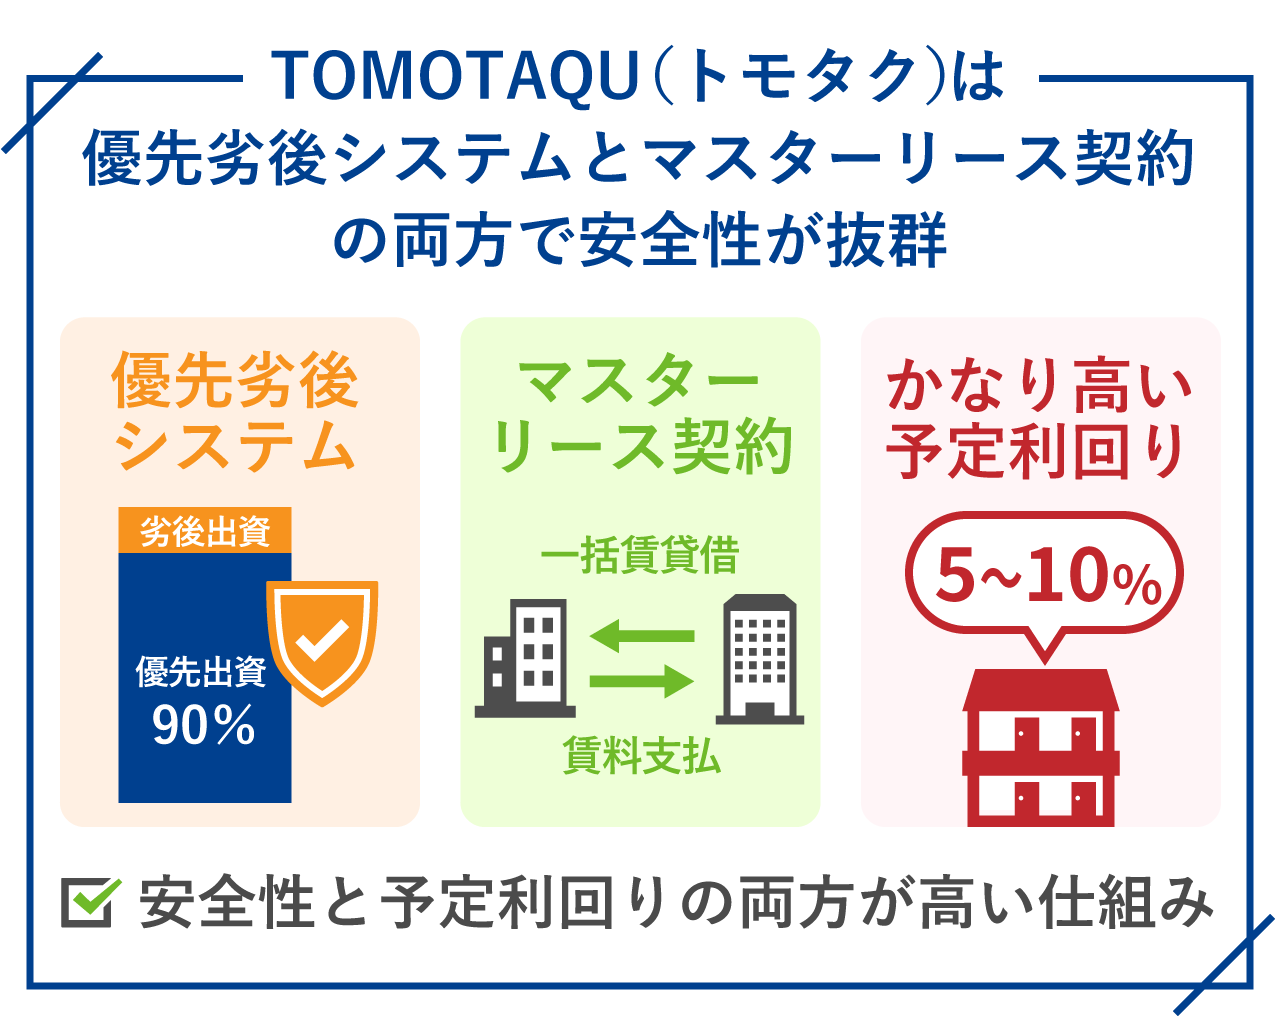 TOMOTAQU（トモタク）は優先劣後システムとマスターリース契約の両方で安全性が抜群